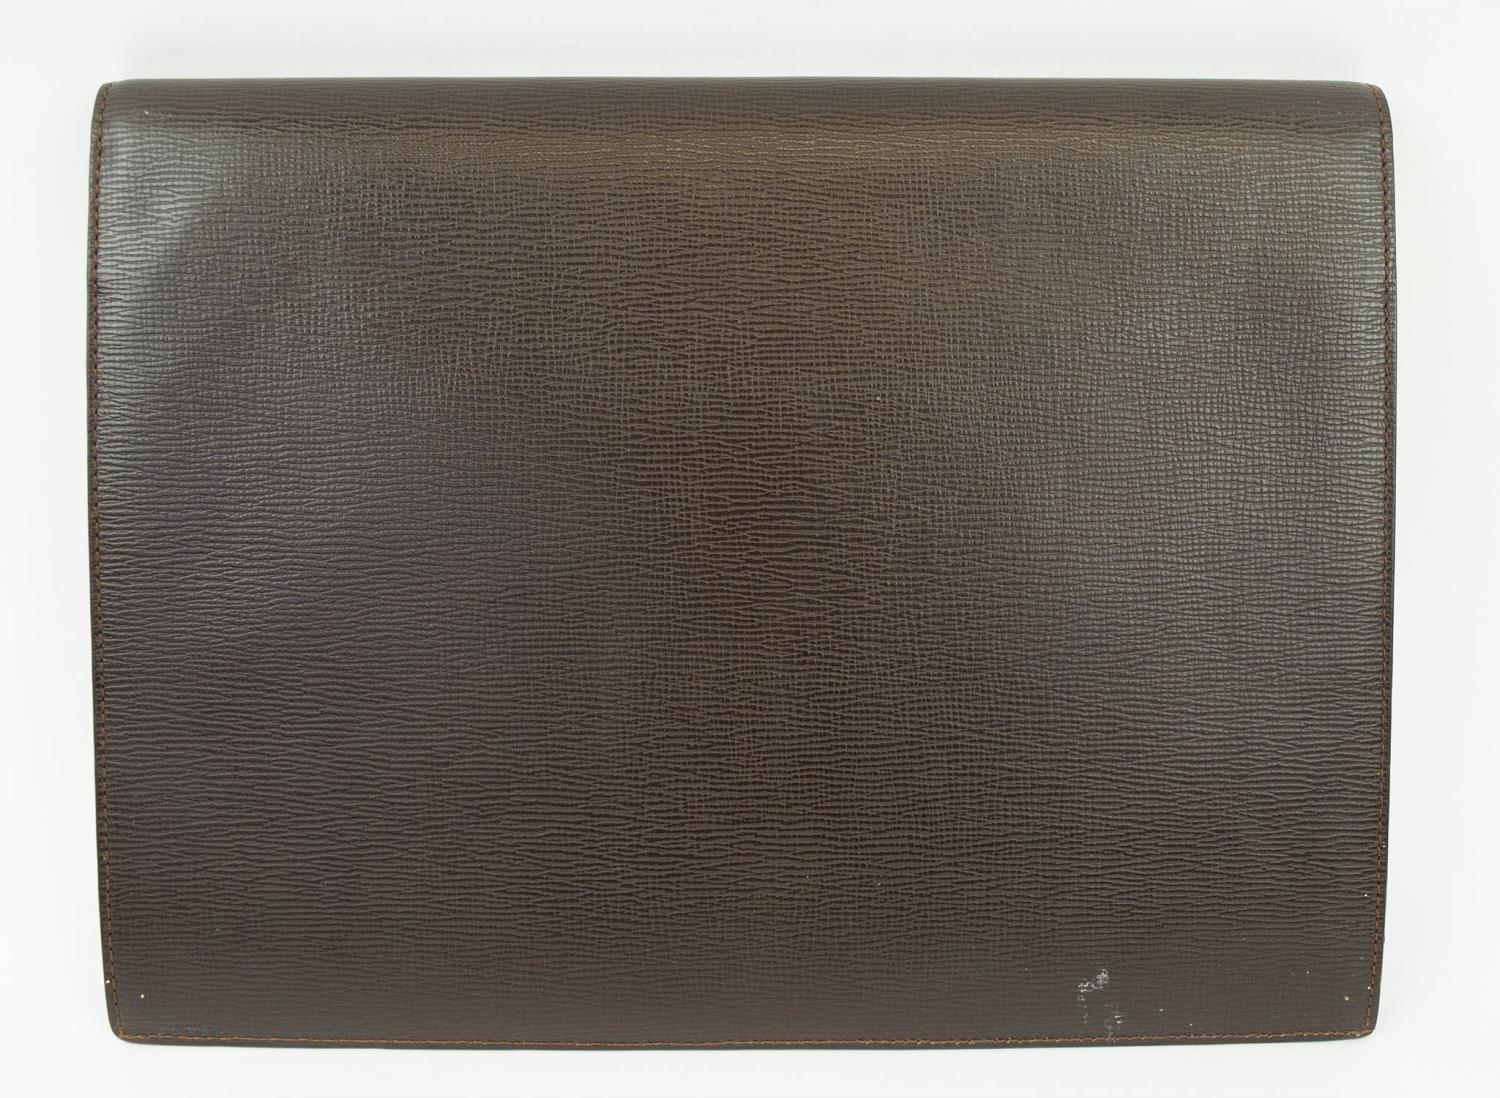 LOEWE FOLIO, luxury brown Spanish leather, 36cm x 28cm. - Image 2 of 8